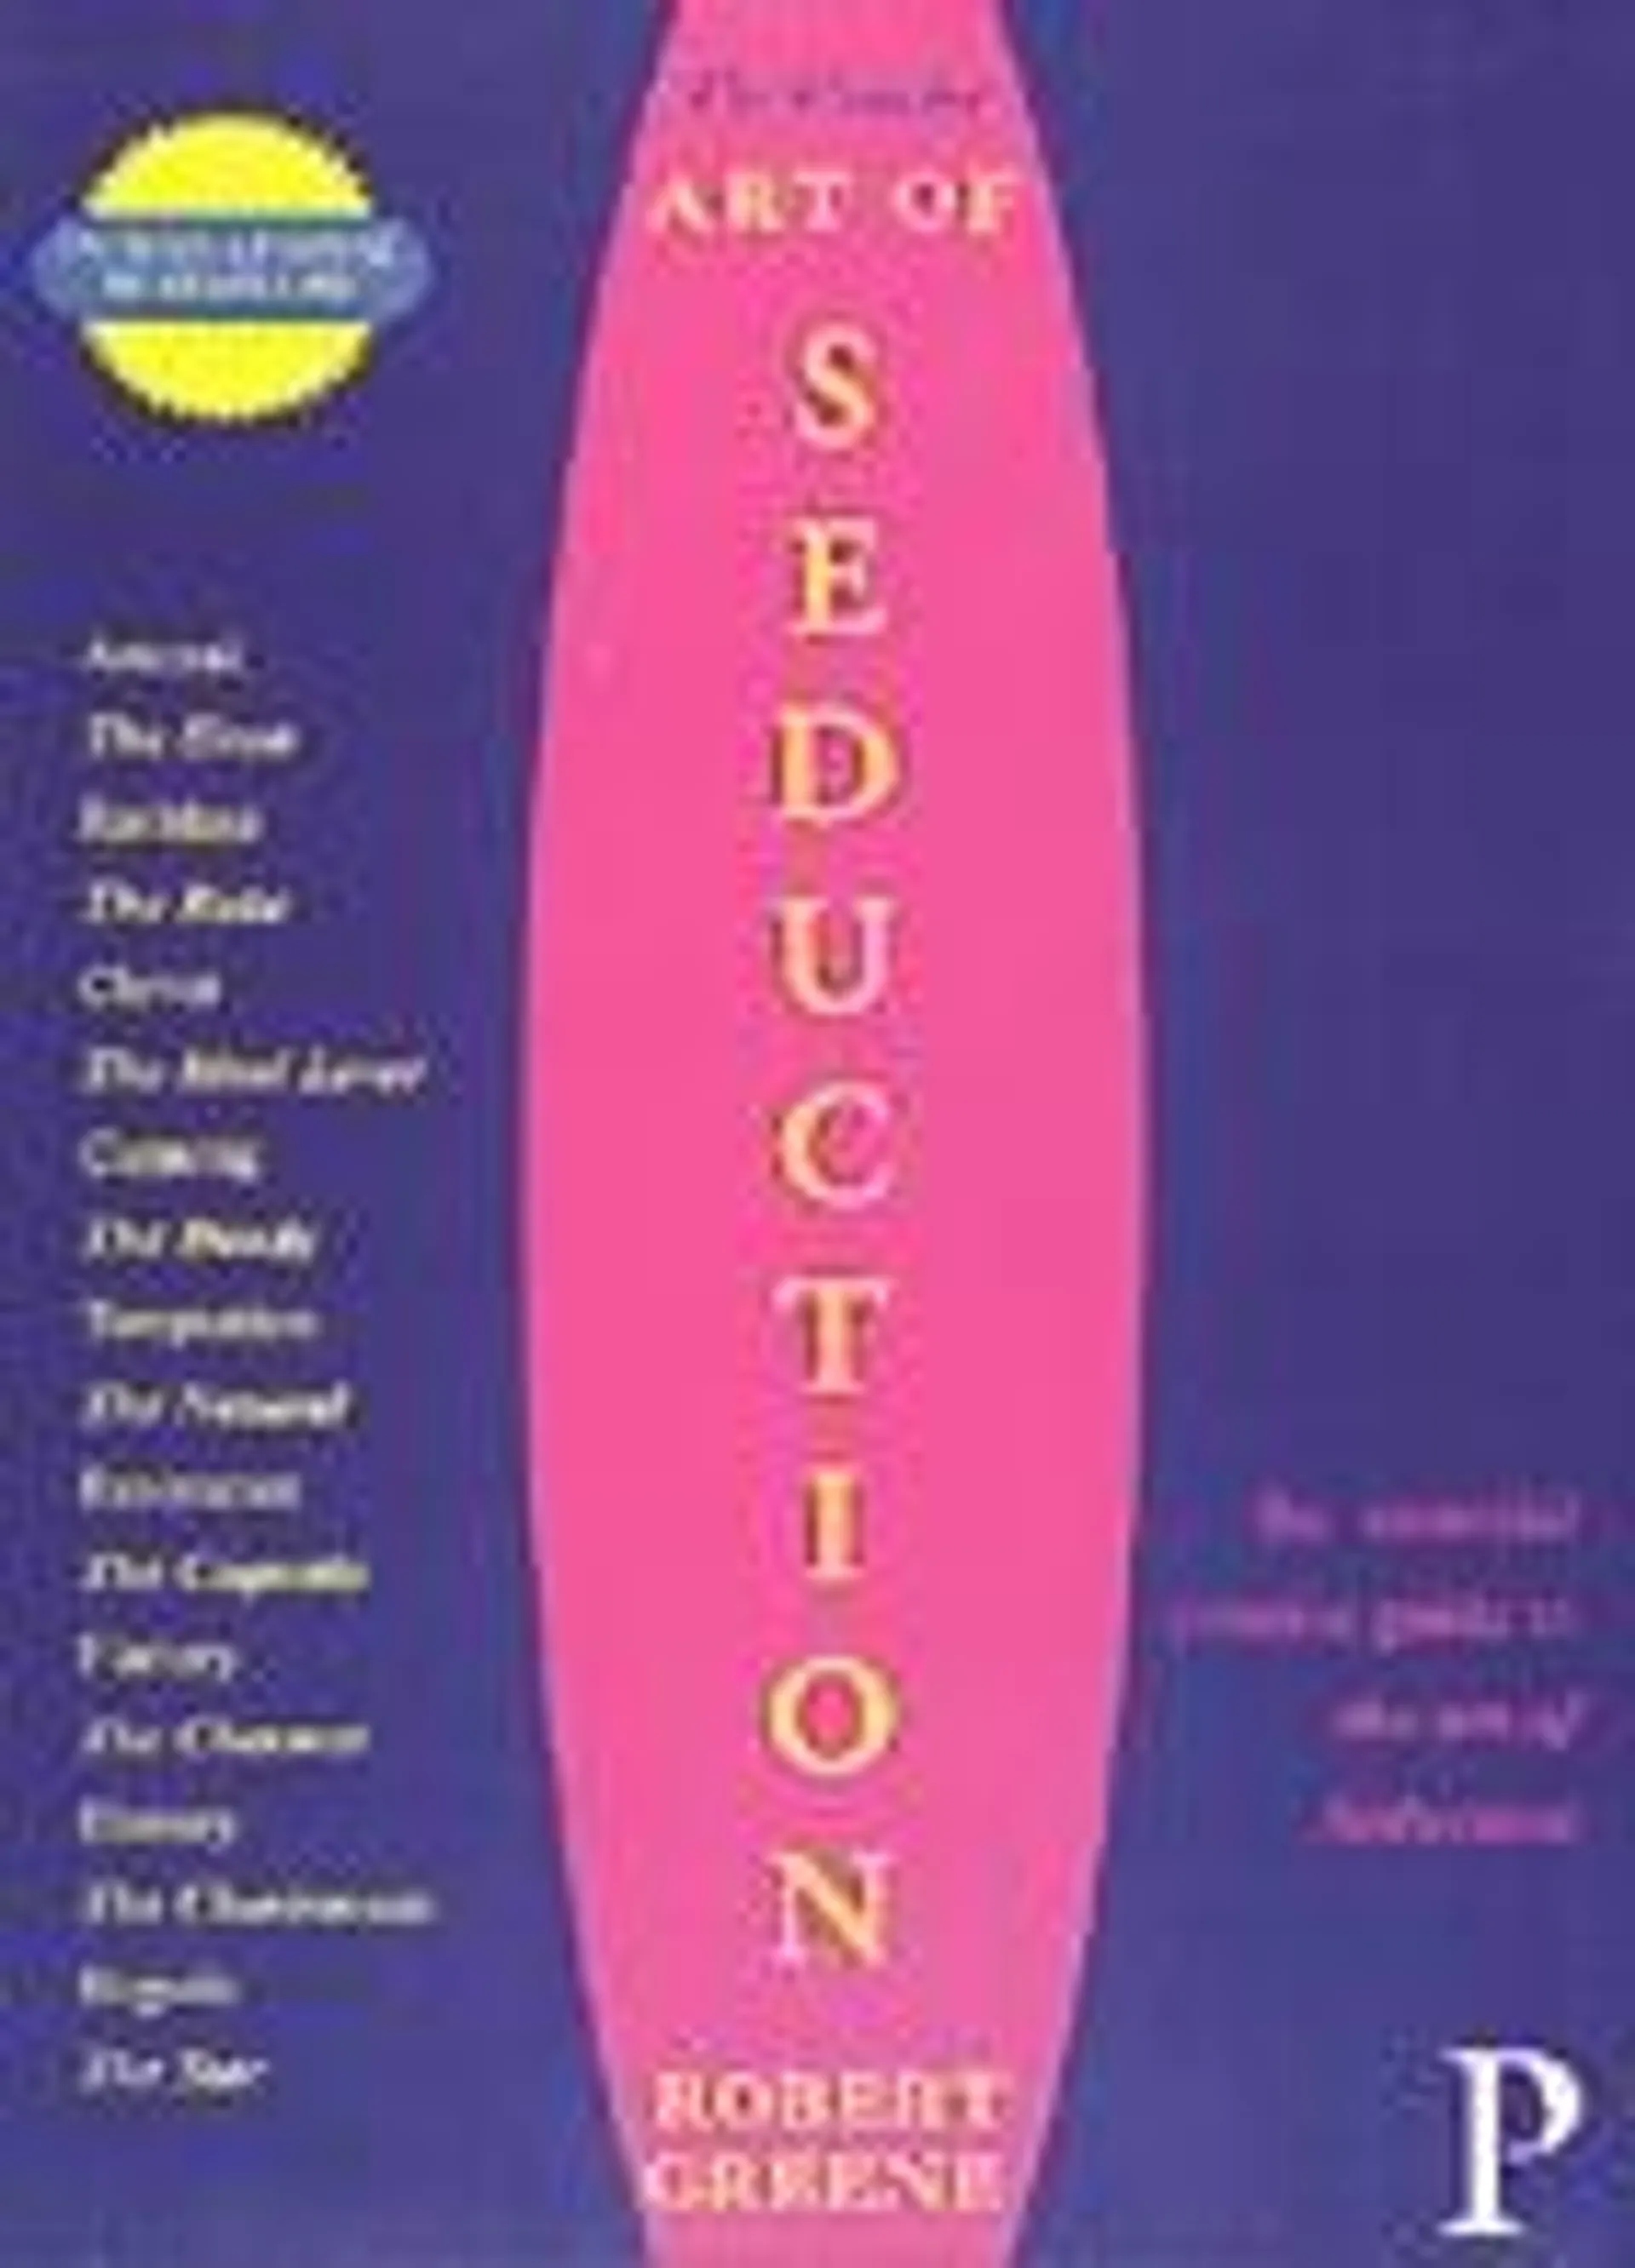 Concise Art of Seduction